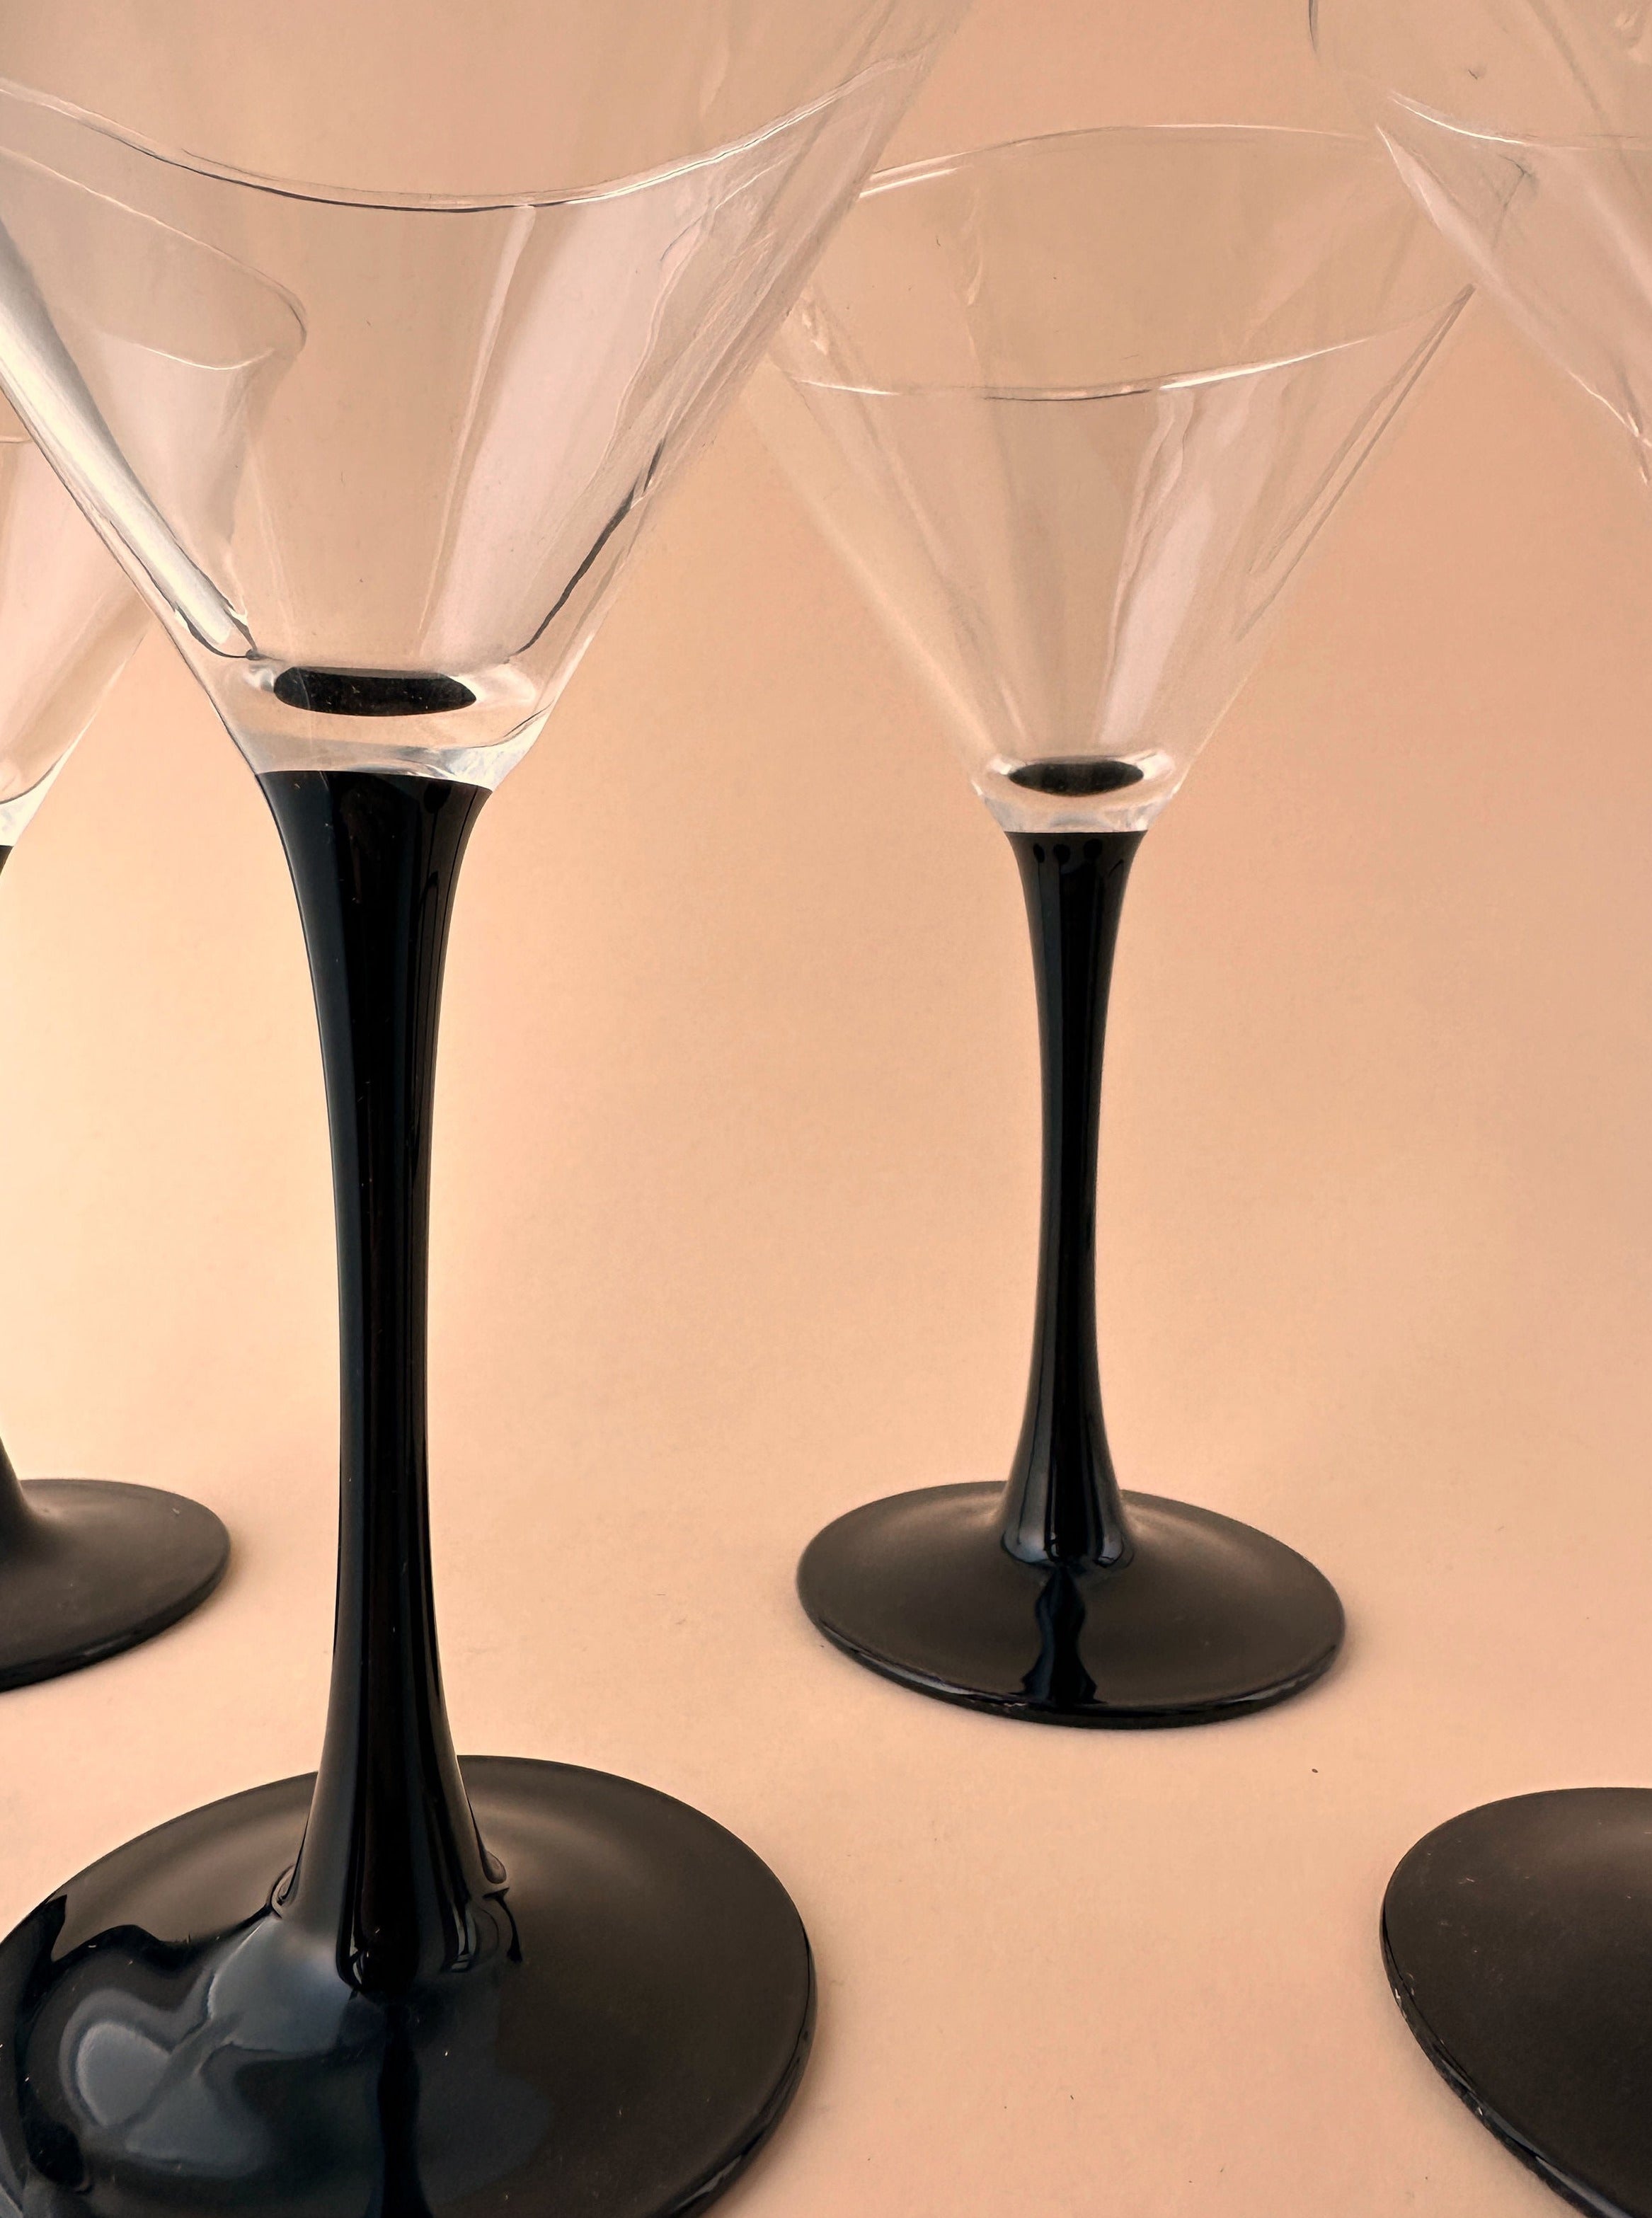 Personalized 10 oz. Signature Black Stem Martini Glasses 